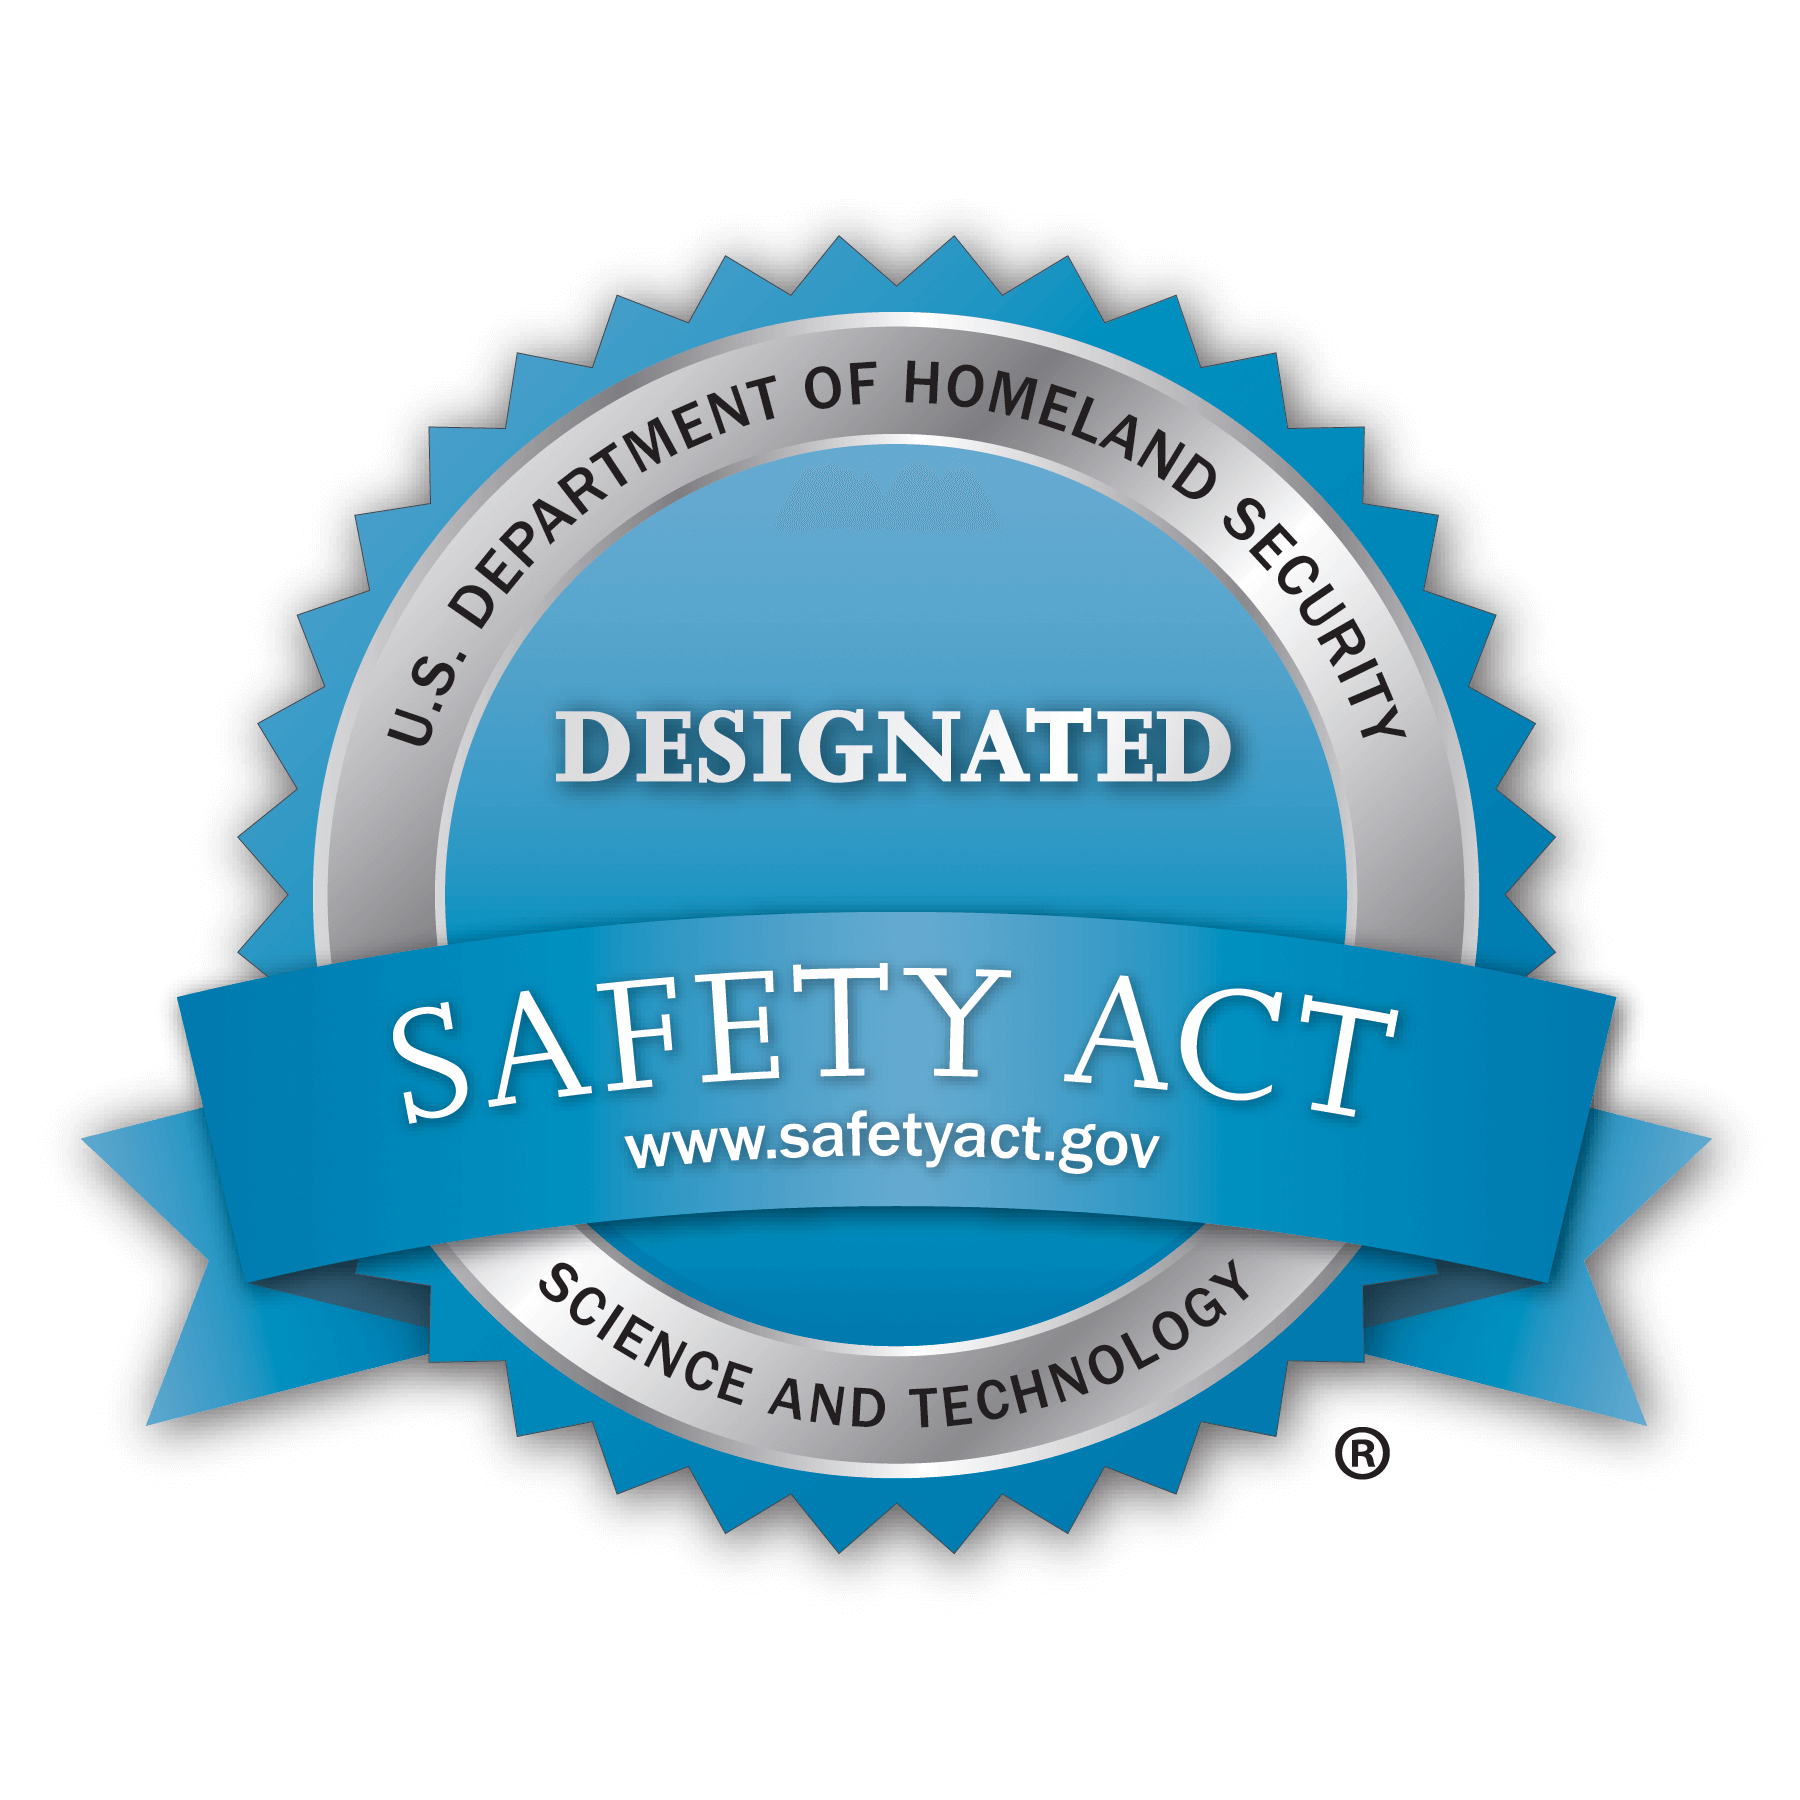 SAFETY Act Designation Kimley-Horn